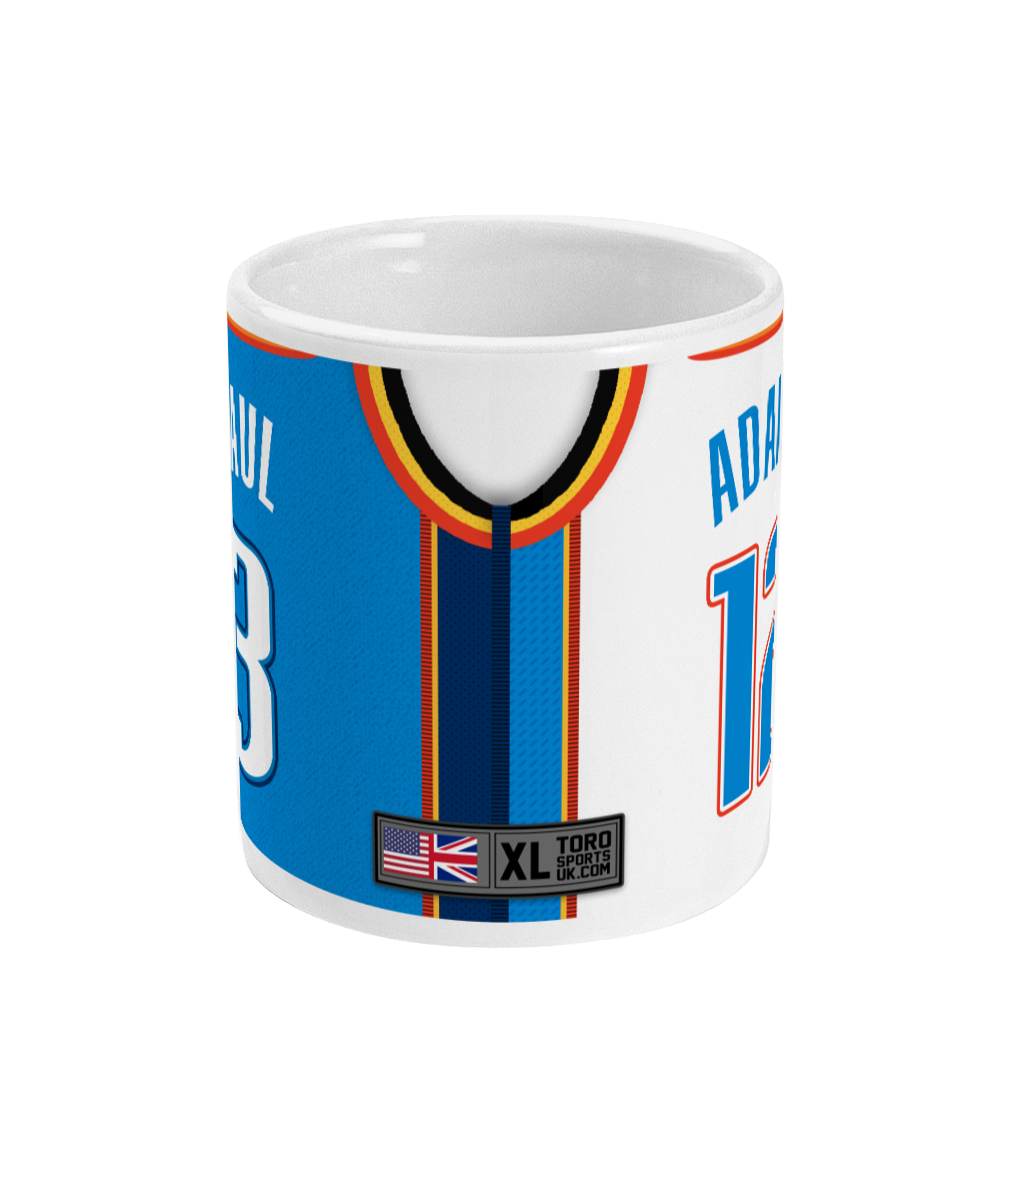 Oklahoma - Custom Personalised Basketball Jersey Mug